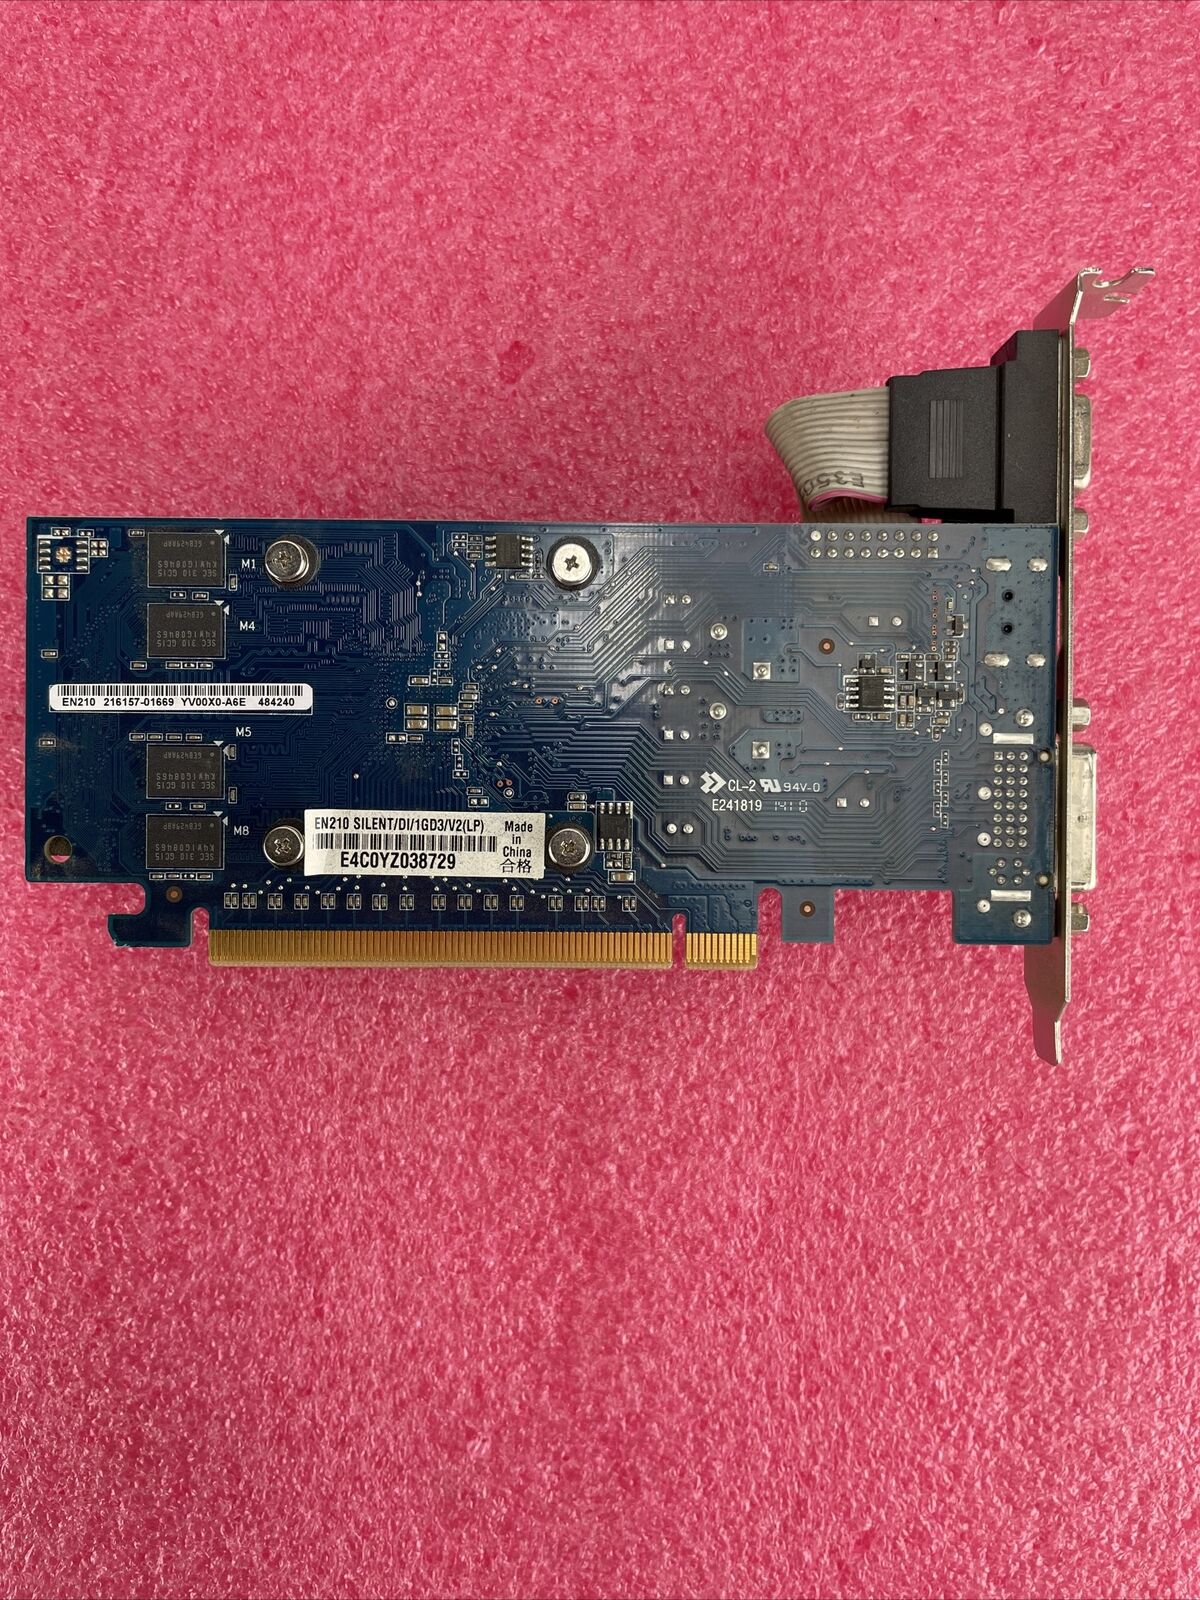 ASUS EN210 Silent/DI/1GD3-V2(LP) PCIe Graphics Card